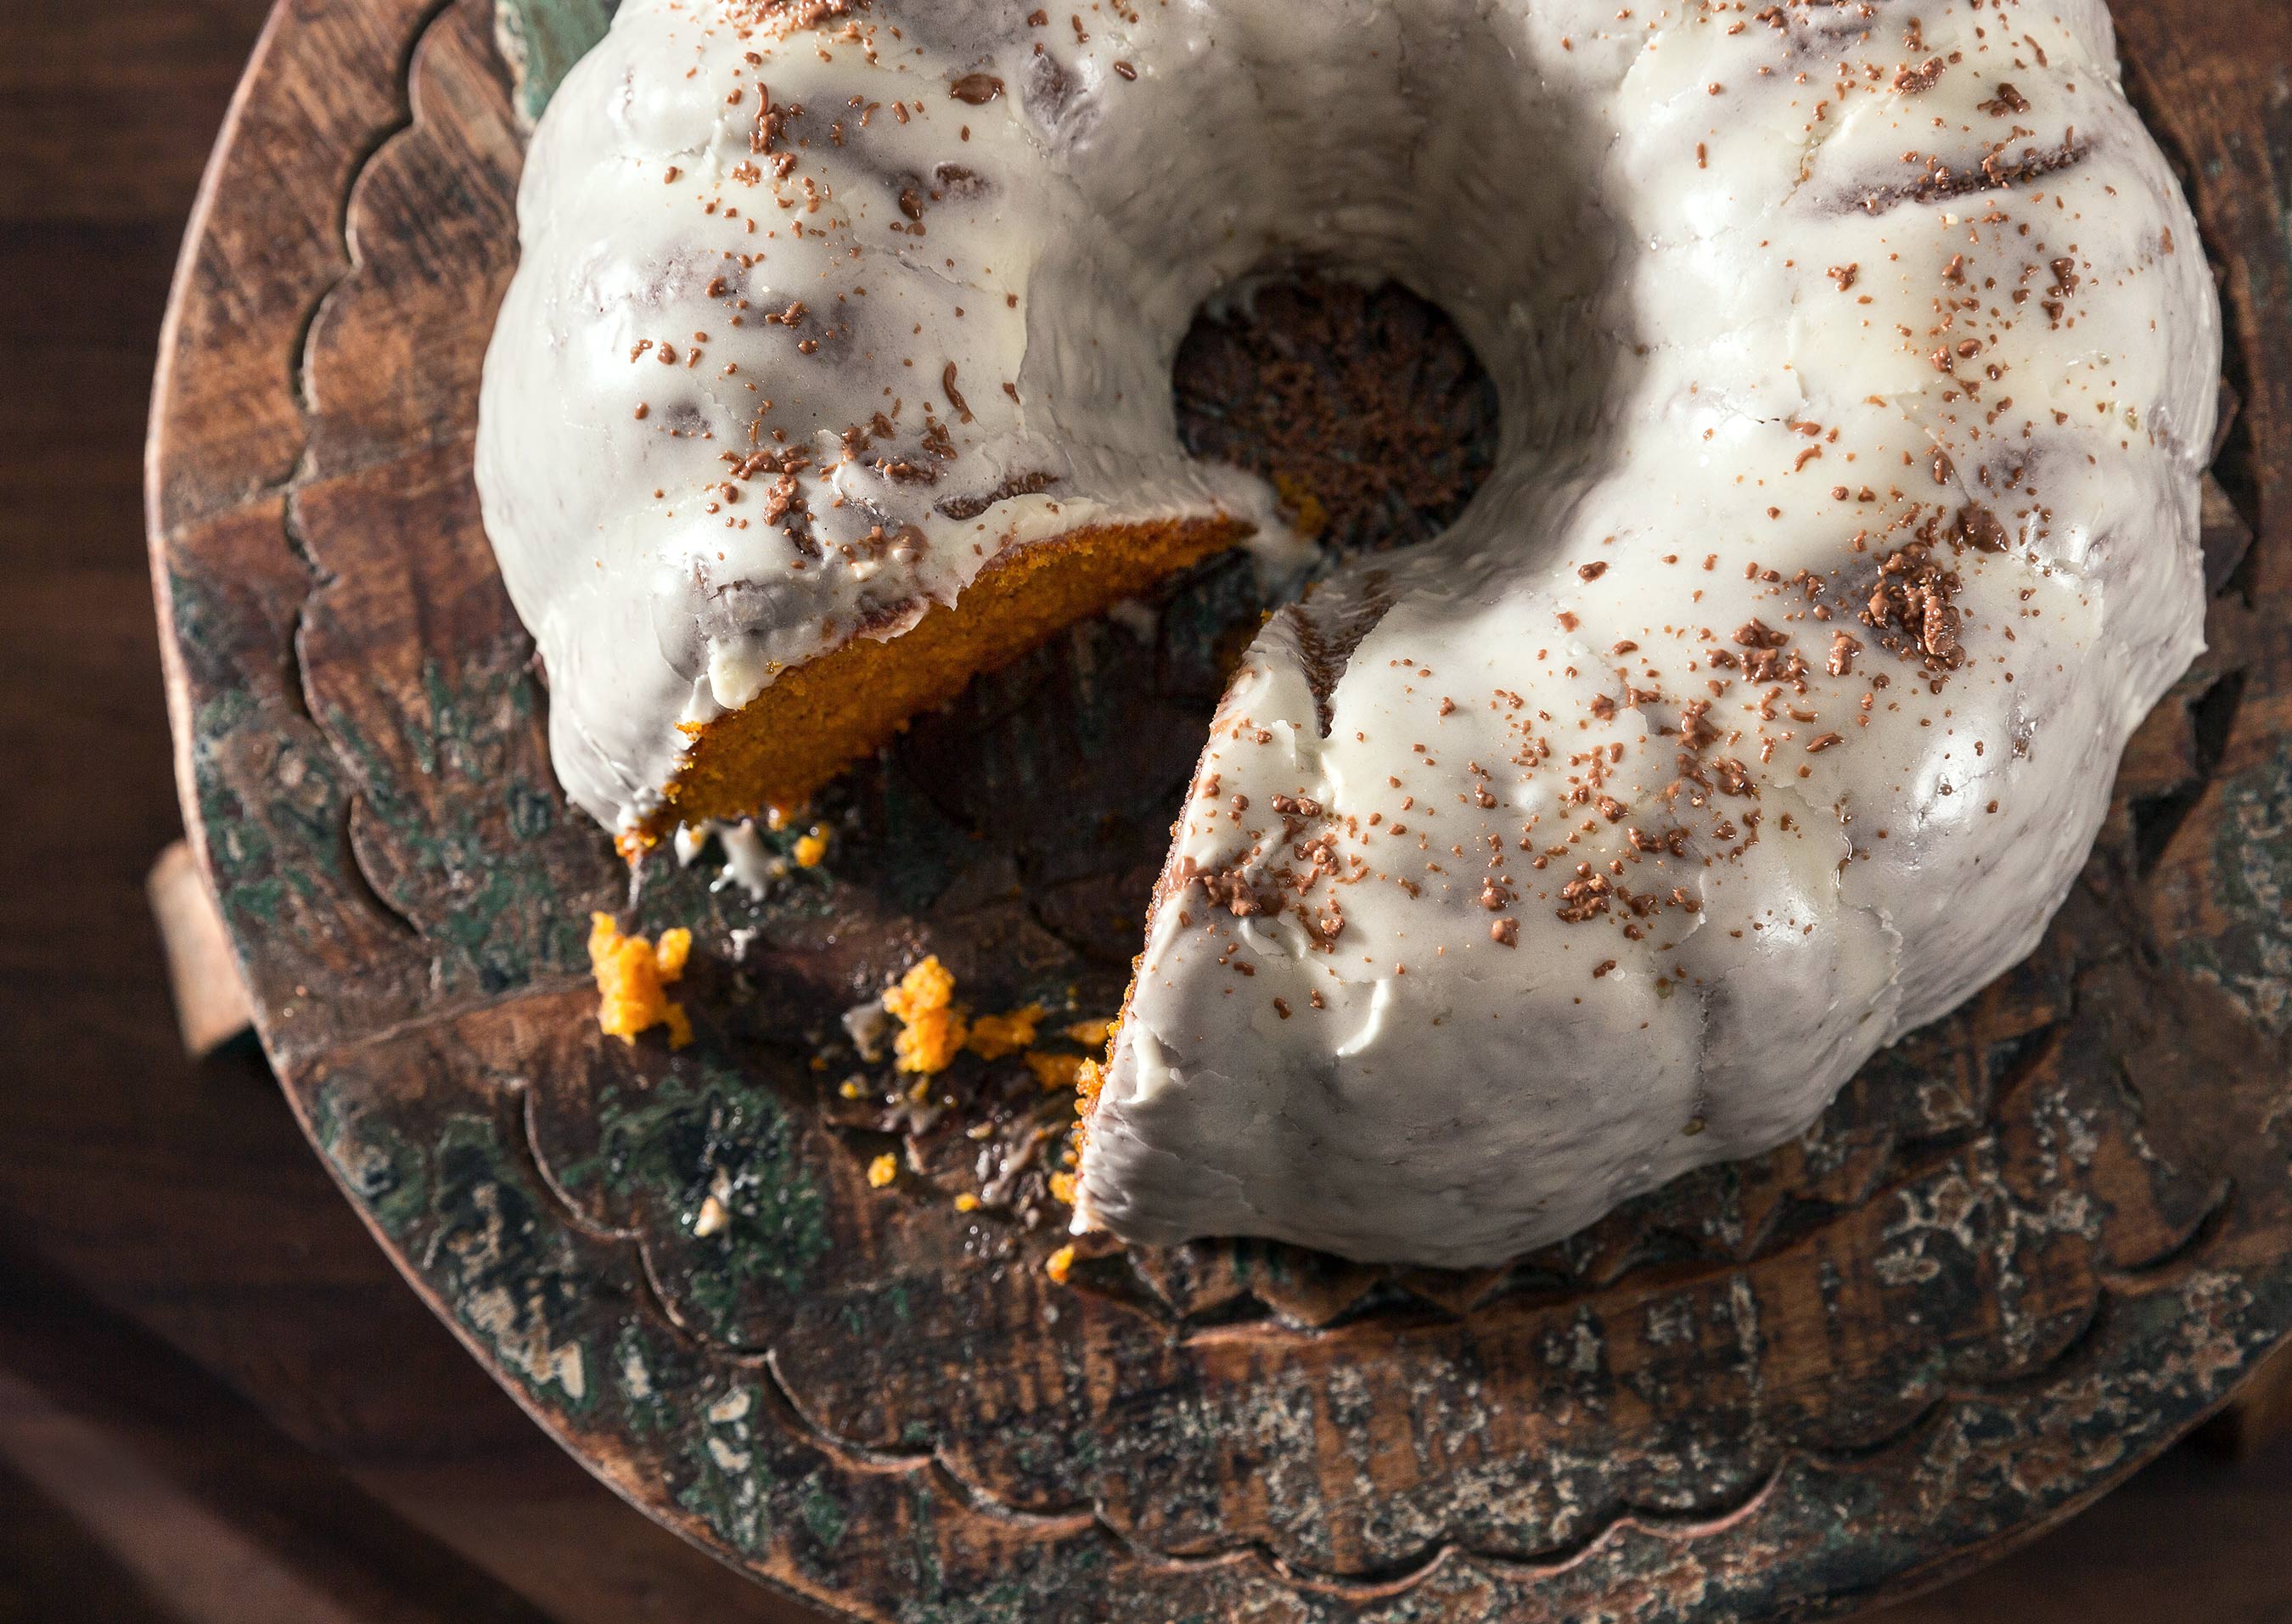 Glanger Photography I Dallas, TX Pumkin spice cake with glaze frosting